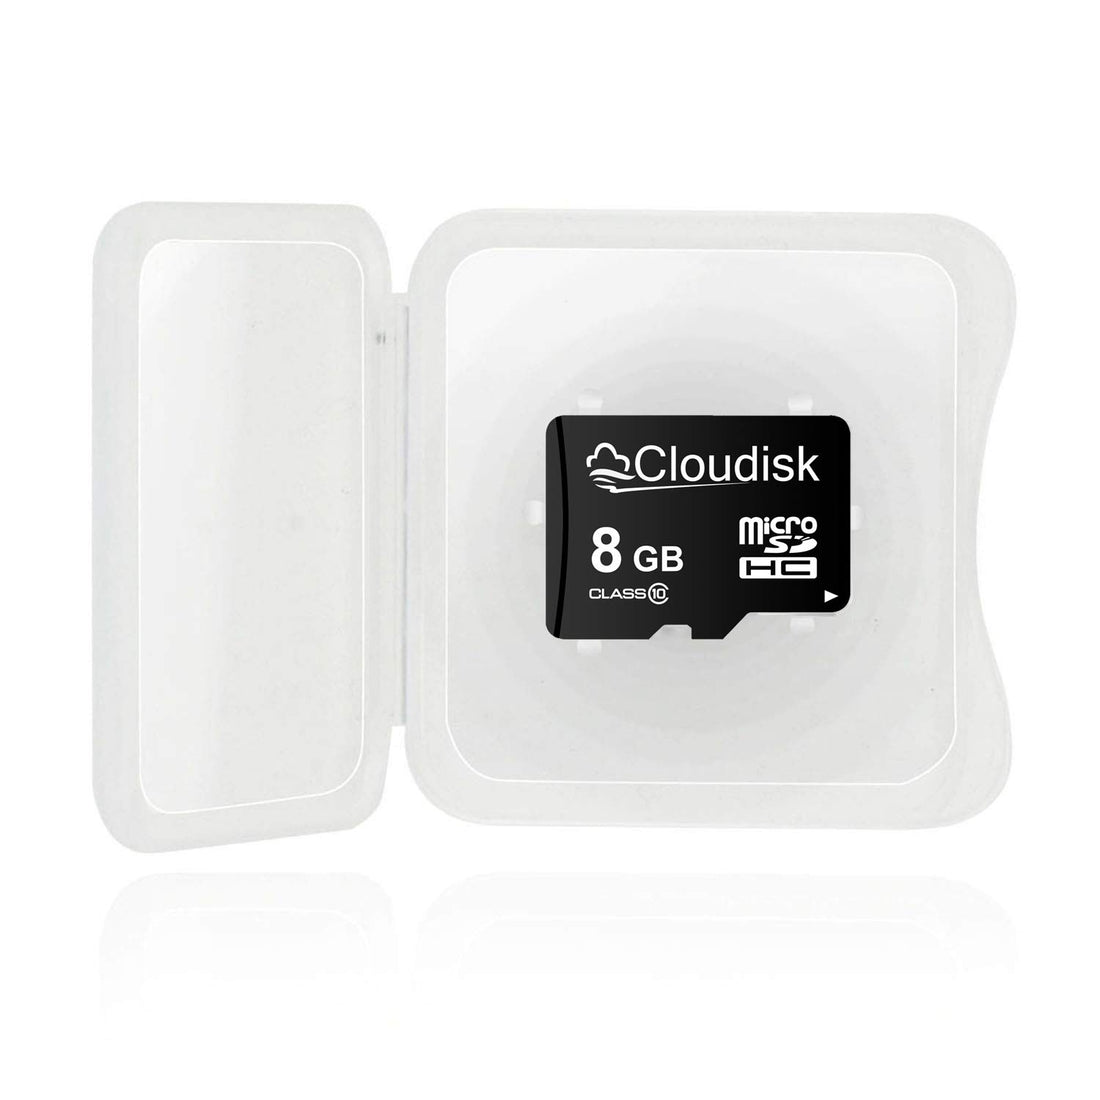 Cloudisk 2Pack 8 GB Micro SD Card MicroSD Memory Card Class 10 (2 Pack 8GB)